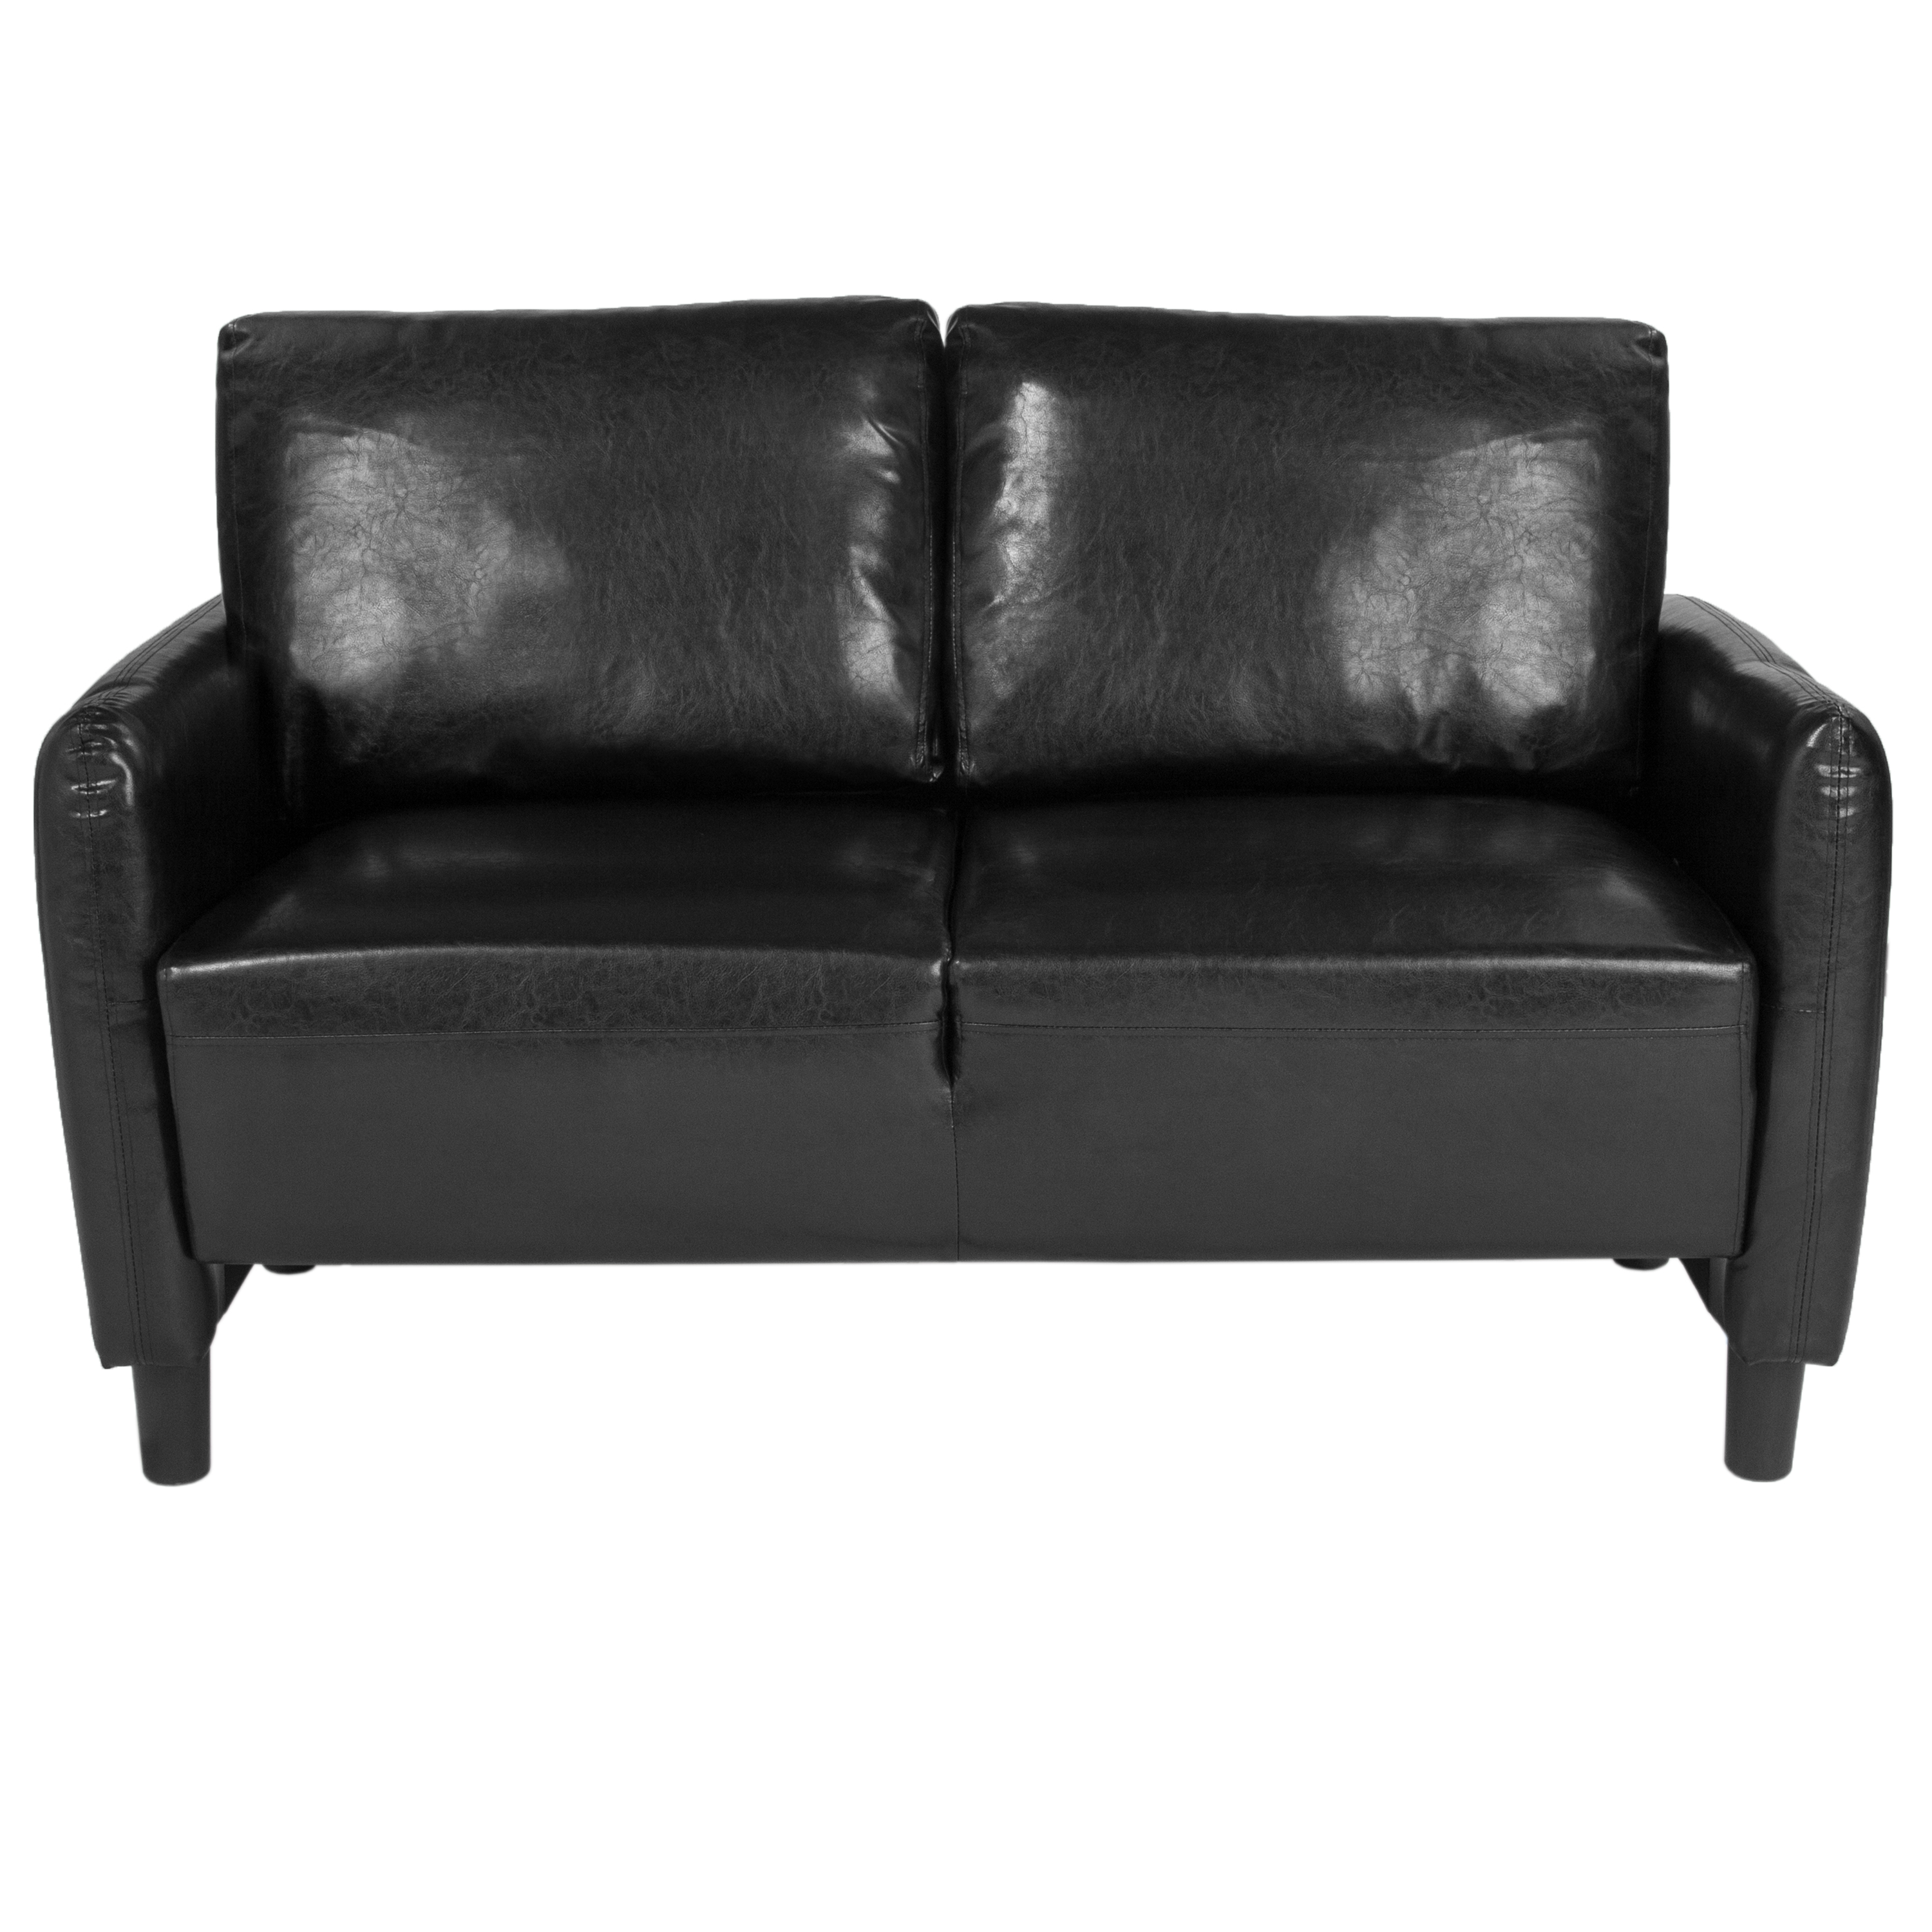 Flash Furniture Candler Park Upholstered Loveseat in Black LeatherSoft - image 5 of 5